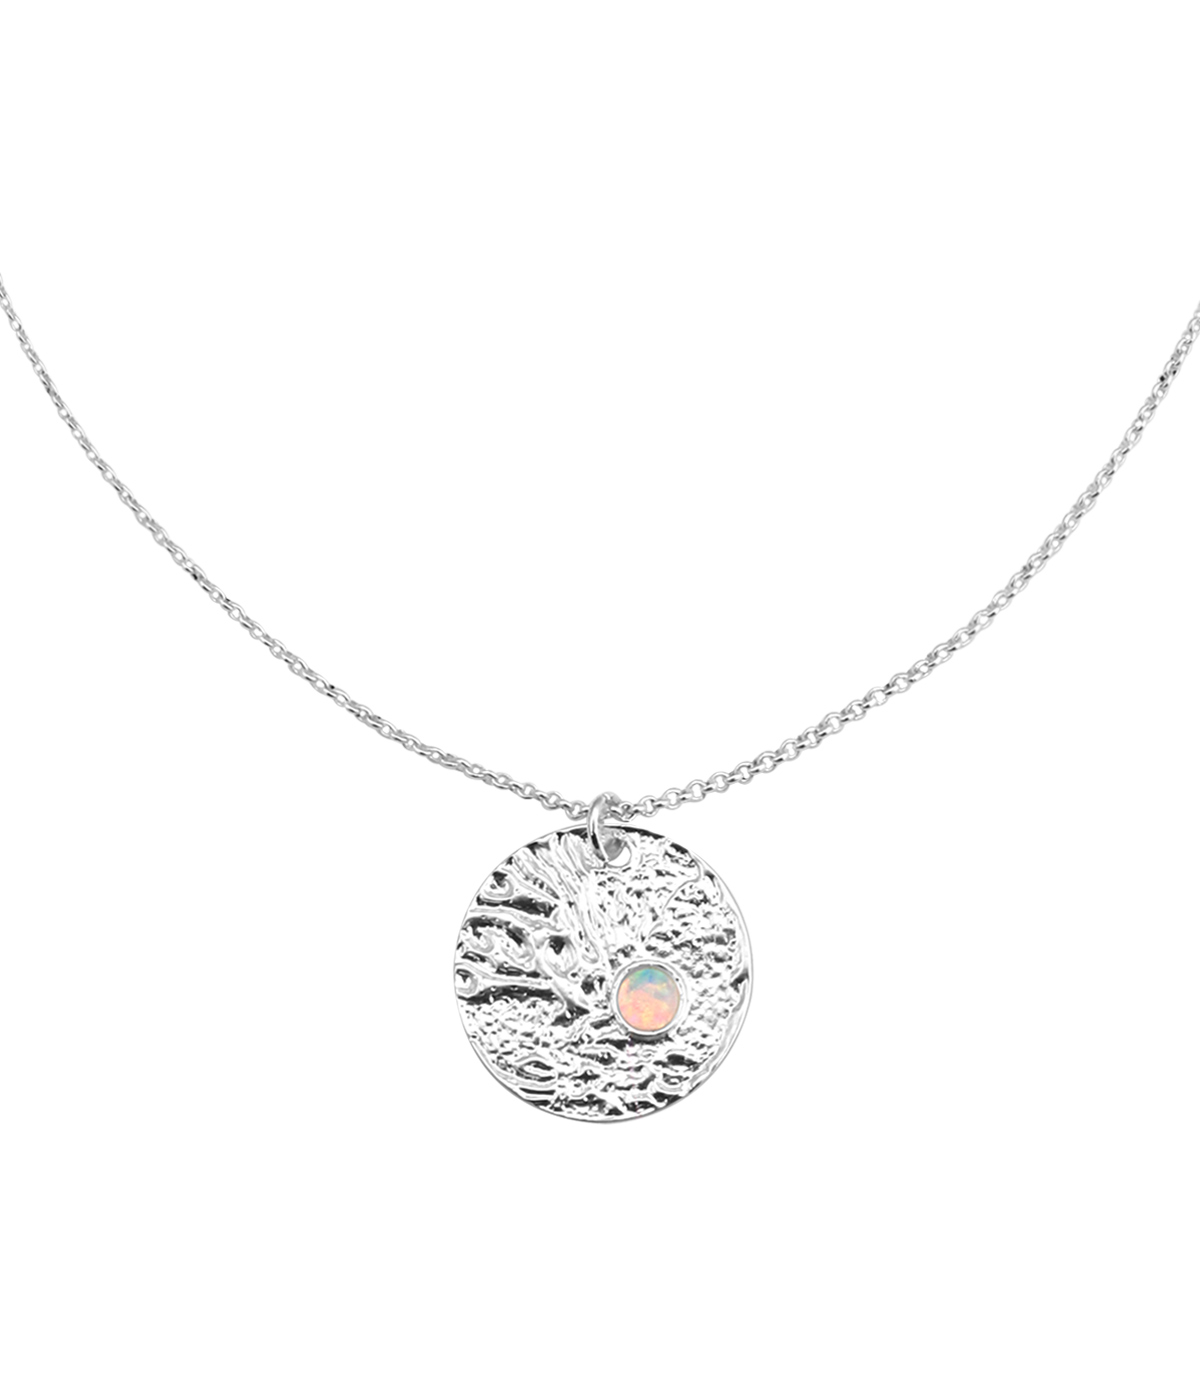 Hestness Anne Lise | Moon opal necklace shiny -latest NECKLACE,Pendant Necklaces design 2021